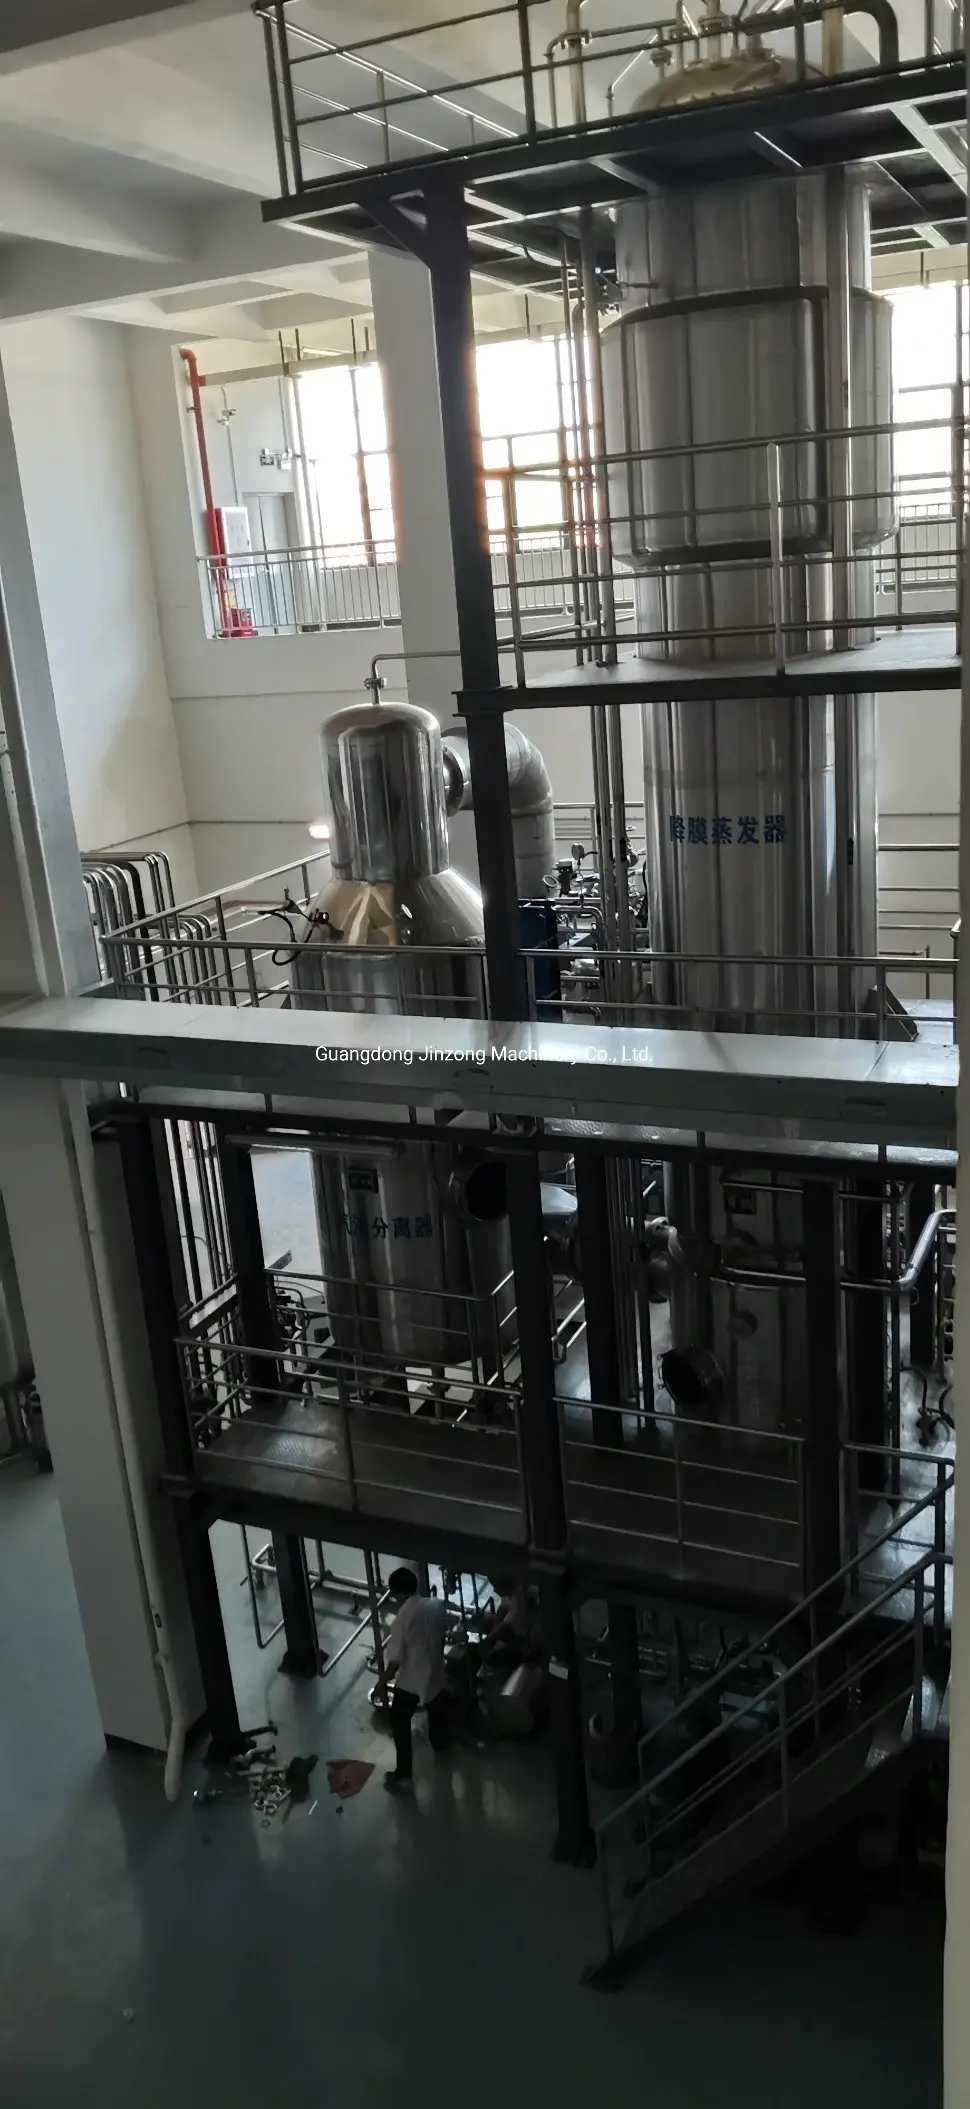 Vacuum Distillation Concentrator Production Line for API Chemical Medicine and Biological Medicine